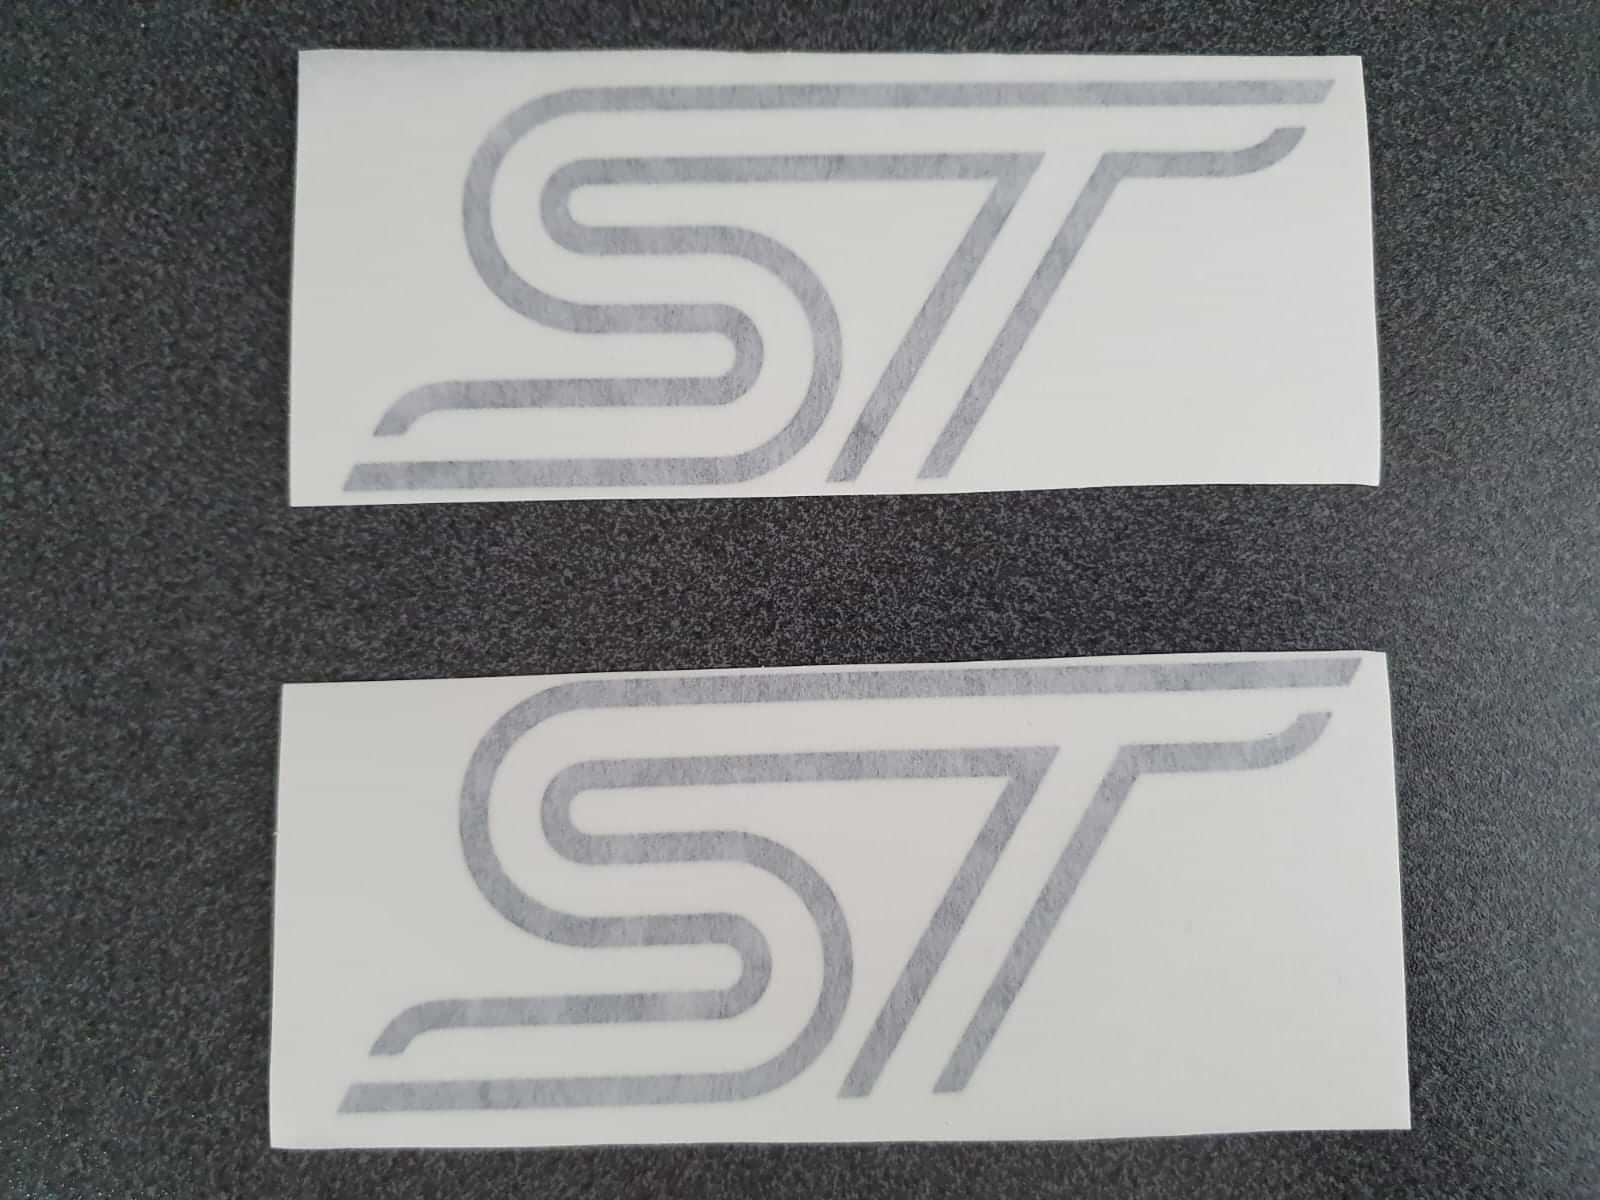 ST stickers